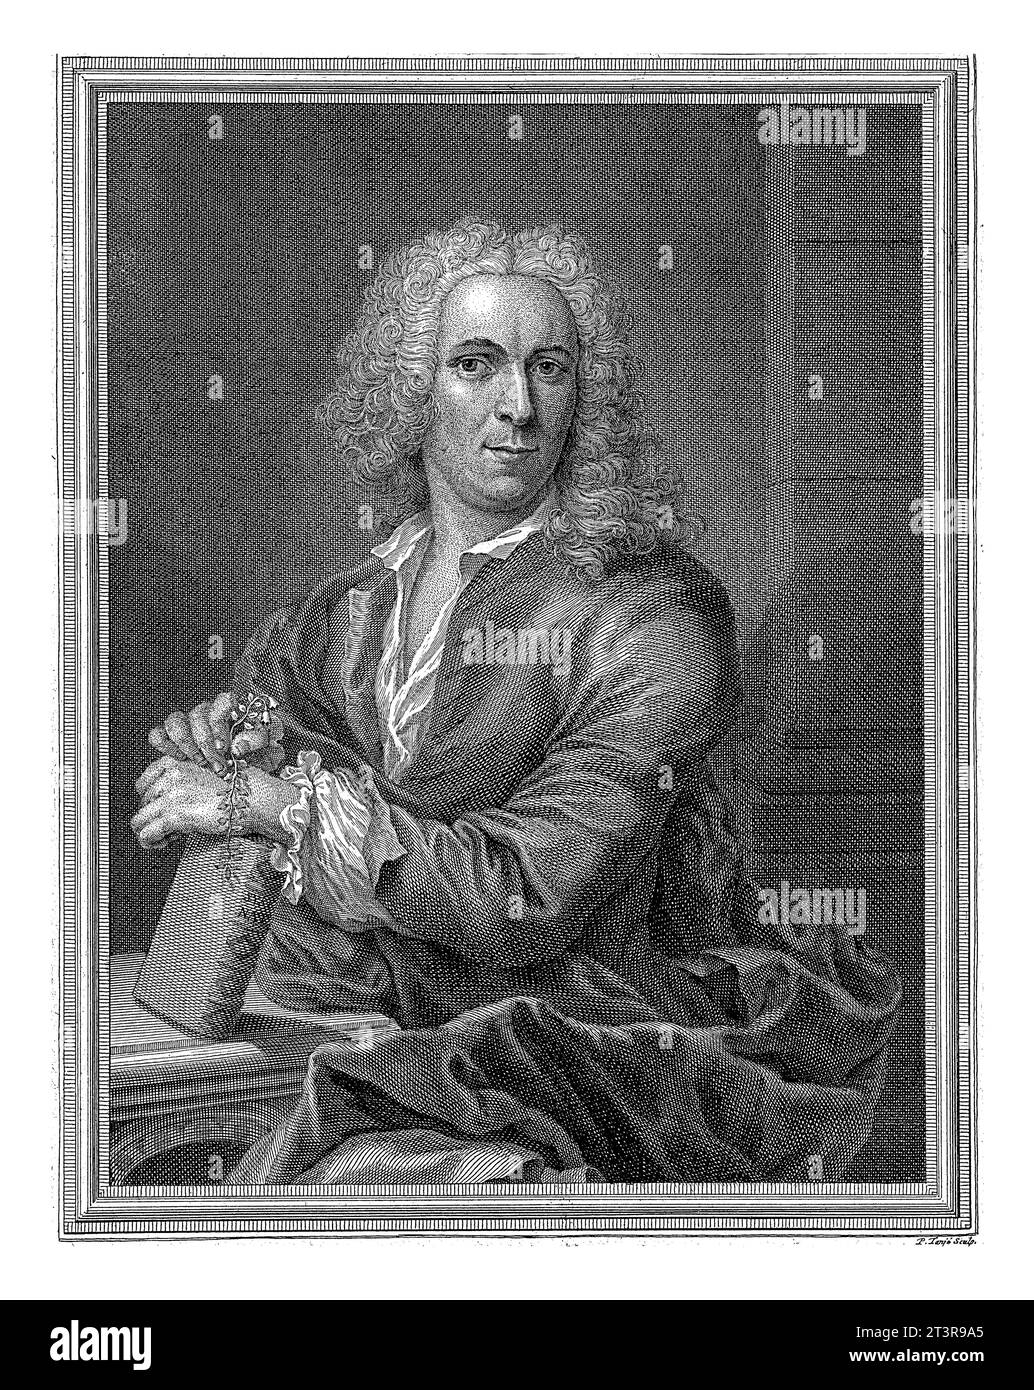 Portrait of Carolus Linaeus, Pieter Tanje, 1716 - 1761 Portrait of botanist Carolus Linaeus, his hands resting on his book Systema Naturae. Stock Photo